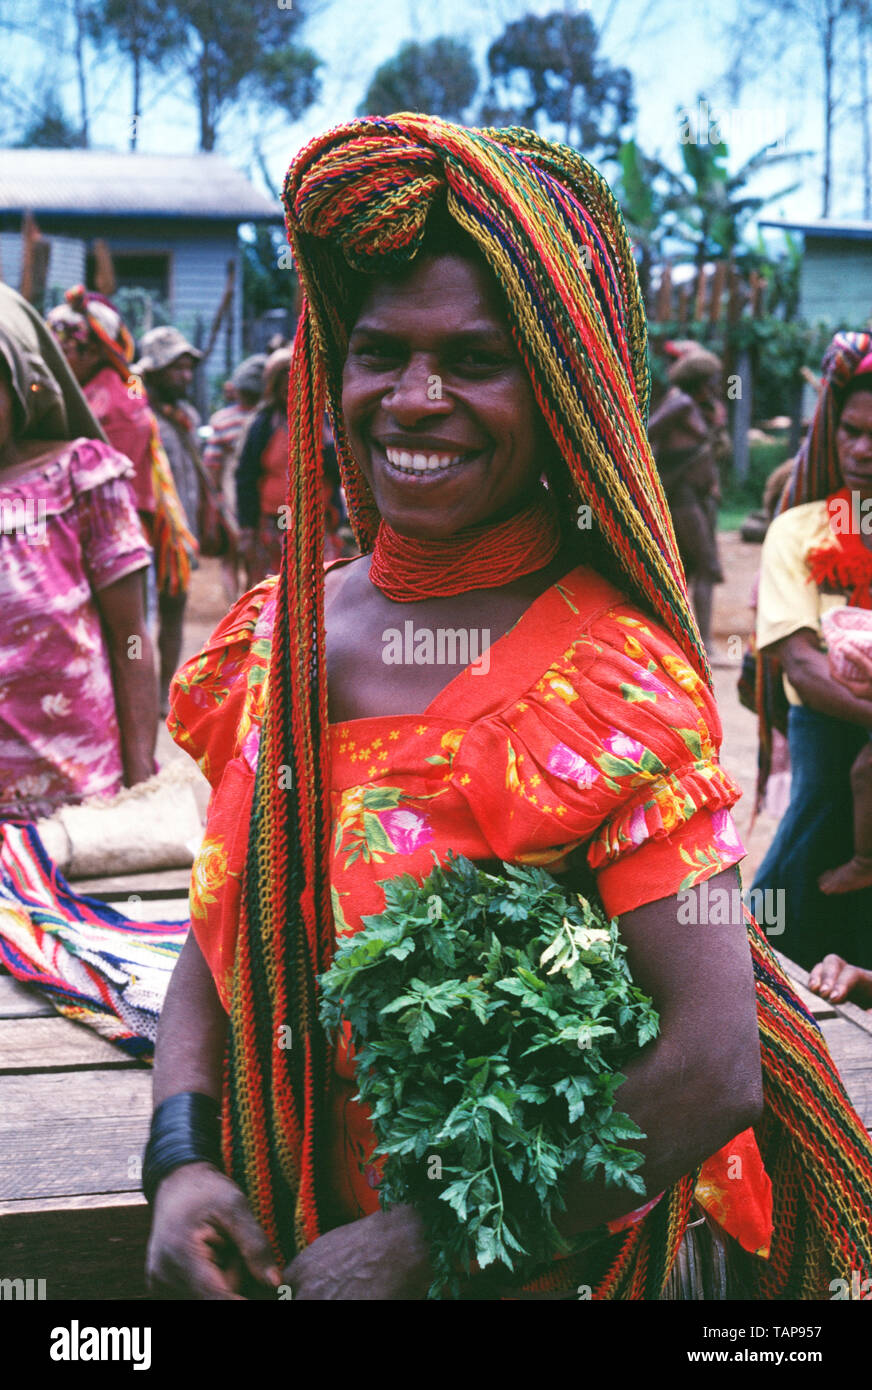 Papua New Guinea. Sepik River region. Local woman outdoors in market. Stock Photo